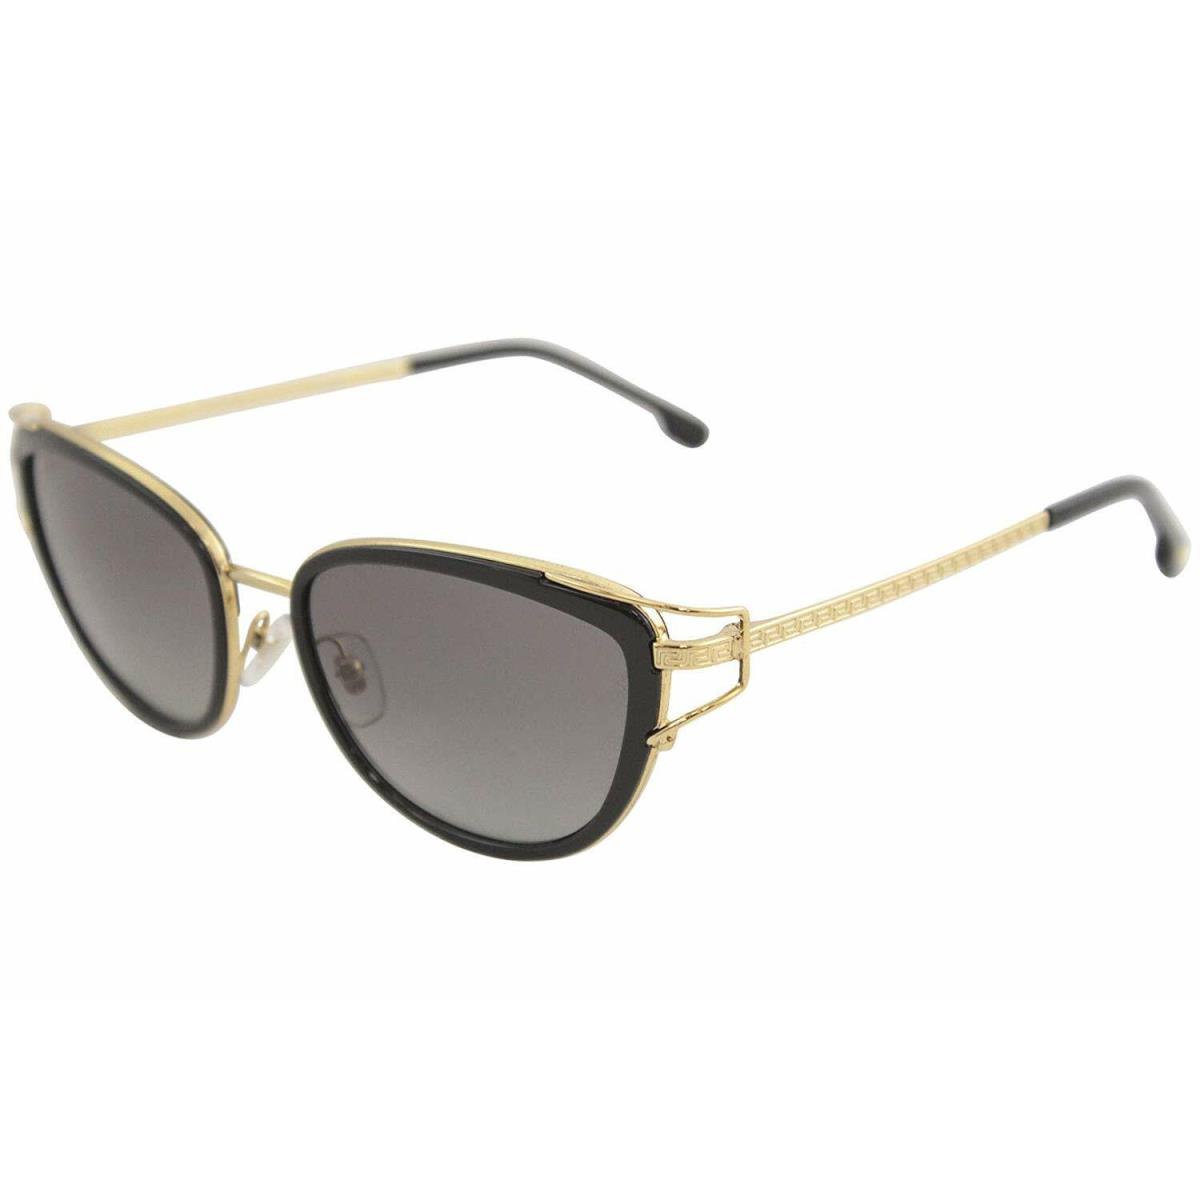 Versace Sunglasses VE2203 143811 53mm Black-gold / Grey Gradient Lens